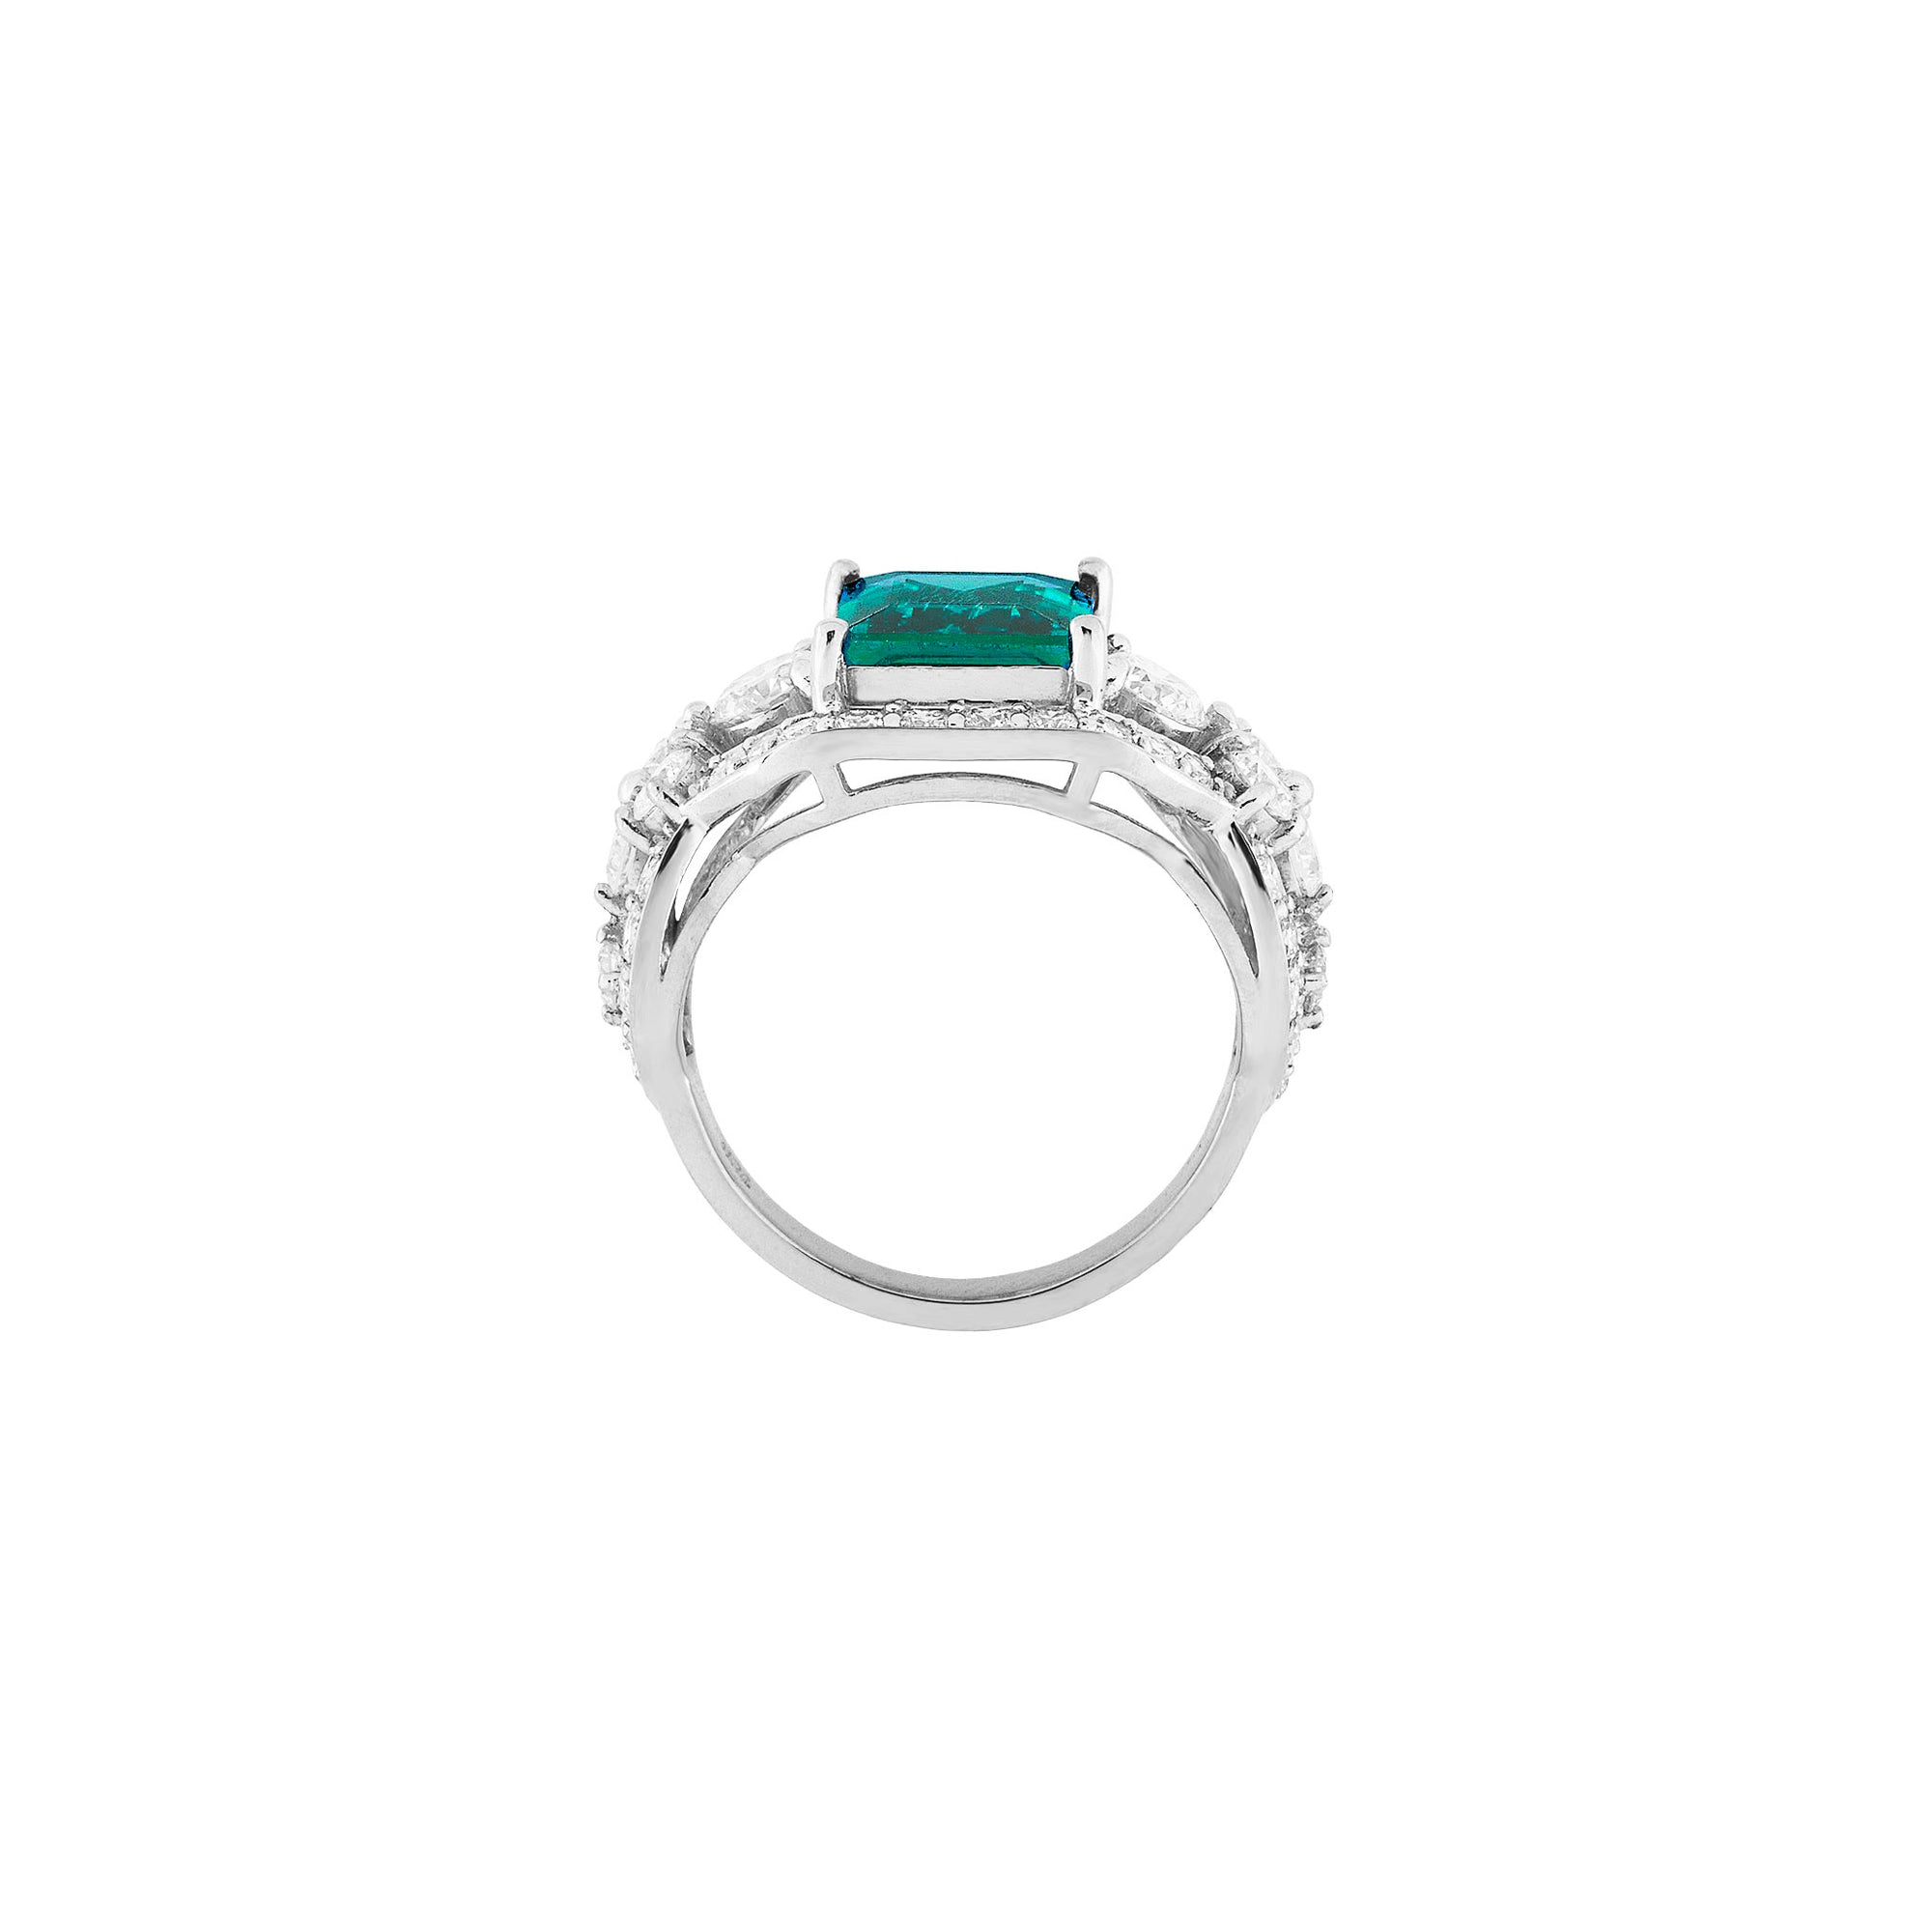 Wintaz Semi Halo Gemstone Ring - Blue Emerald 2021-221